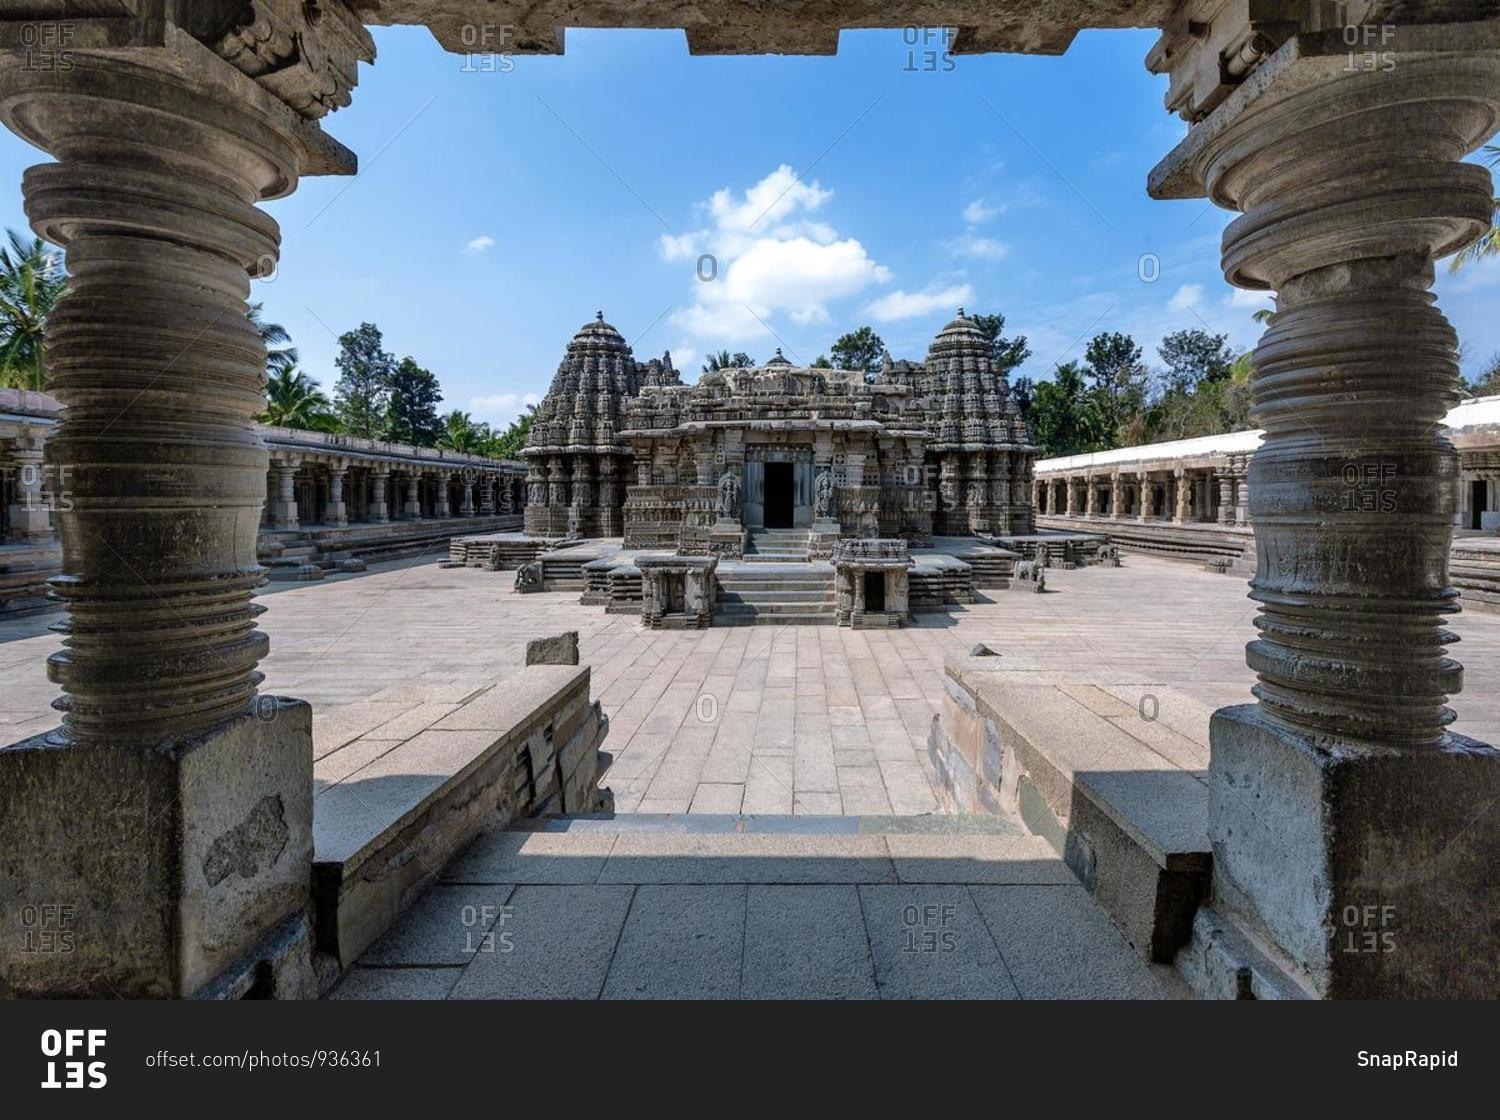 The Chennakesava Temple, Somanathapura, Karnataka, India
stock photo - OFFSET